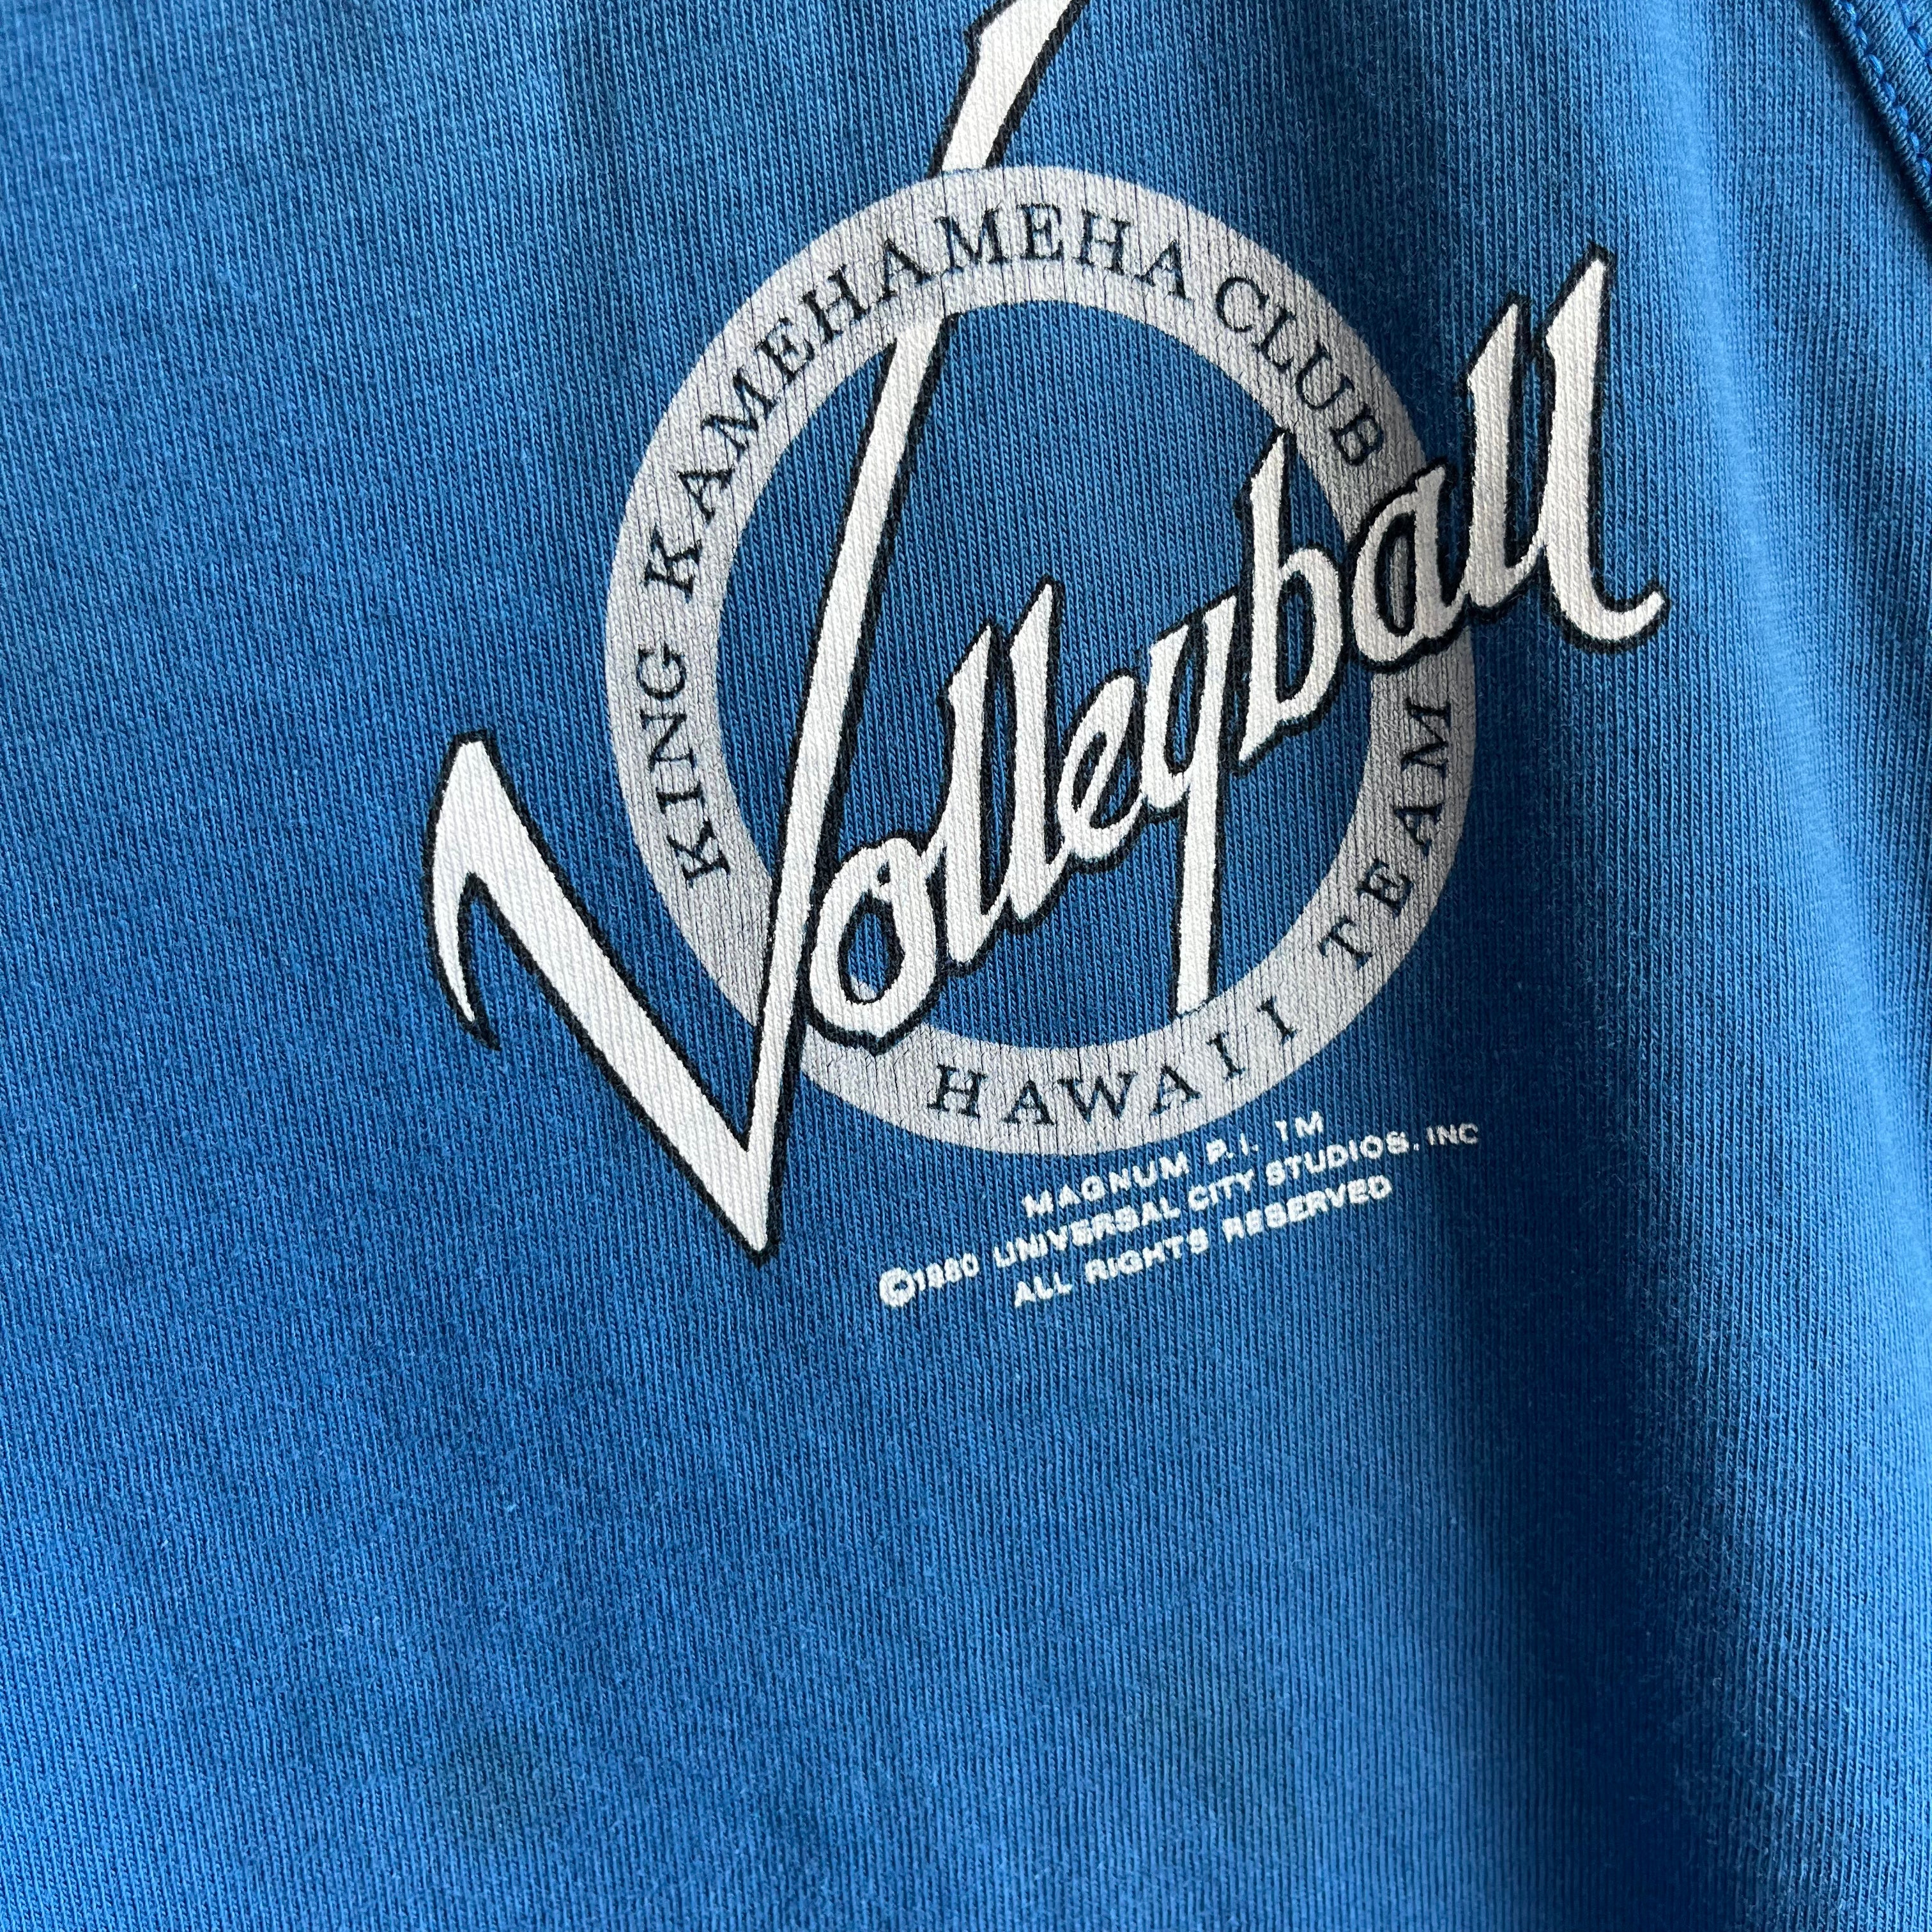 1980 Hawaii Team Volleyball Crazy Shirts Tank Top !!!